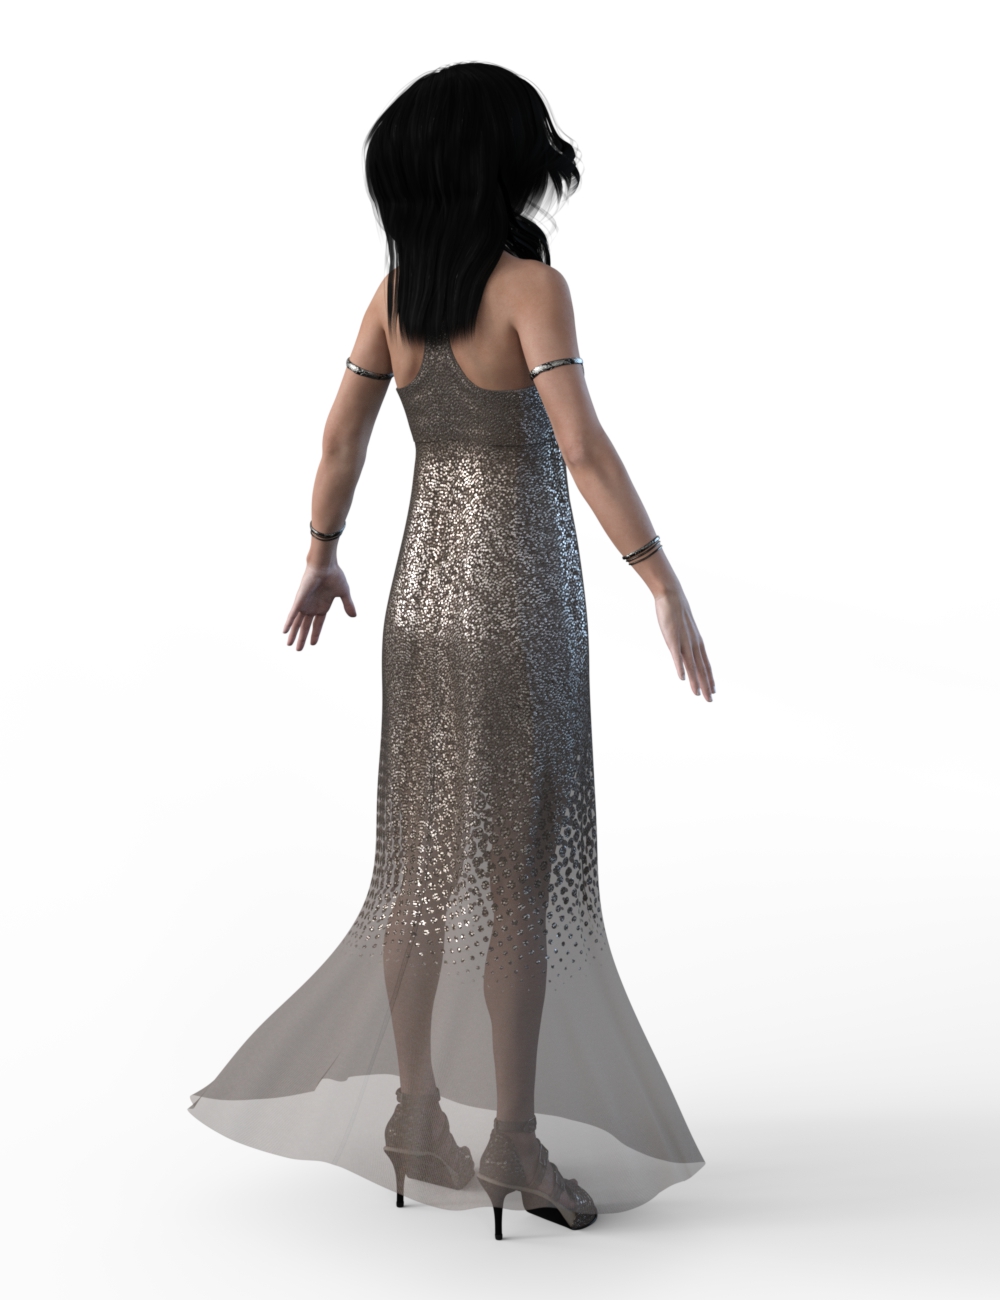 FBX- Mei Lin Maxi Dress Outfit by: Paleo, 3D Models by Daz 3D